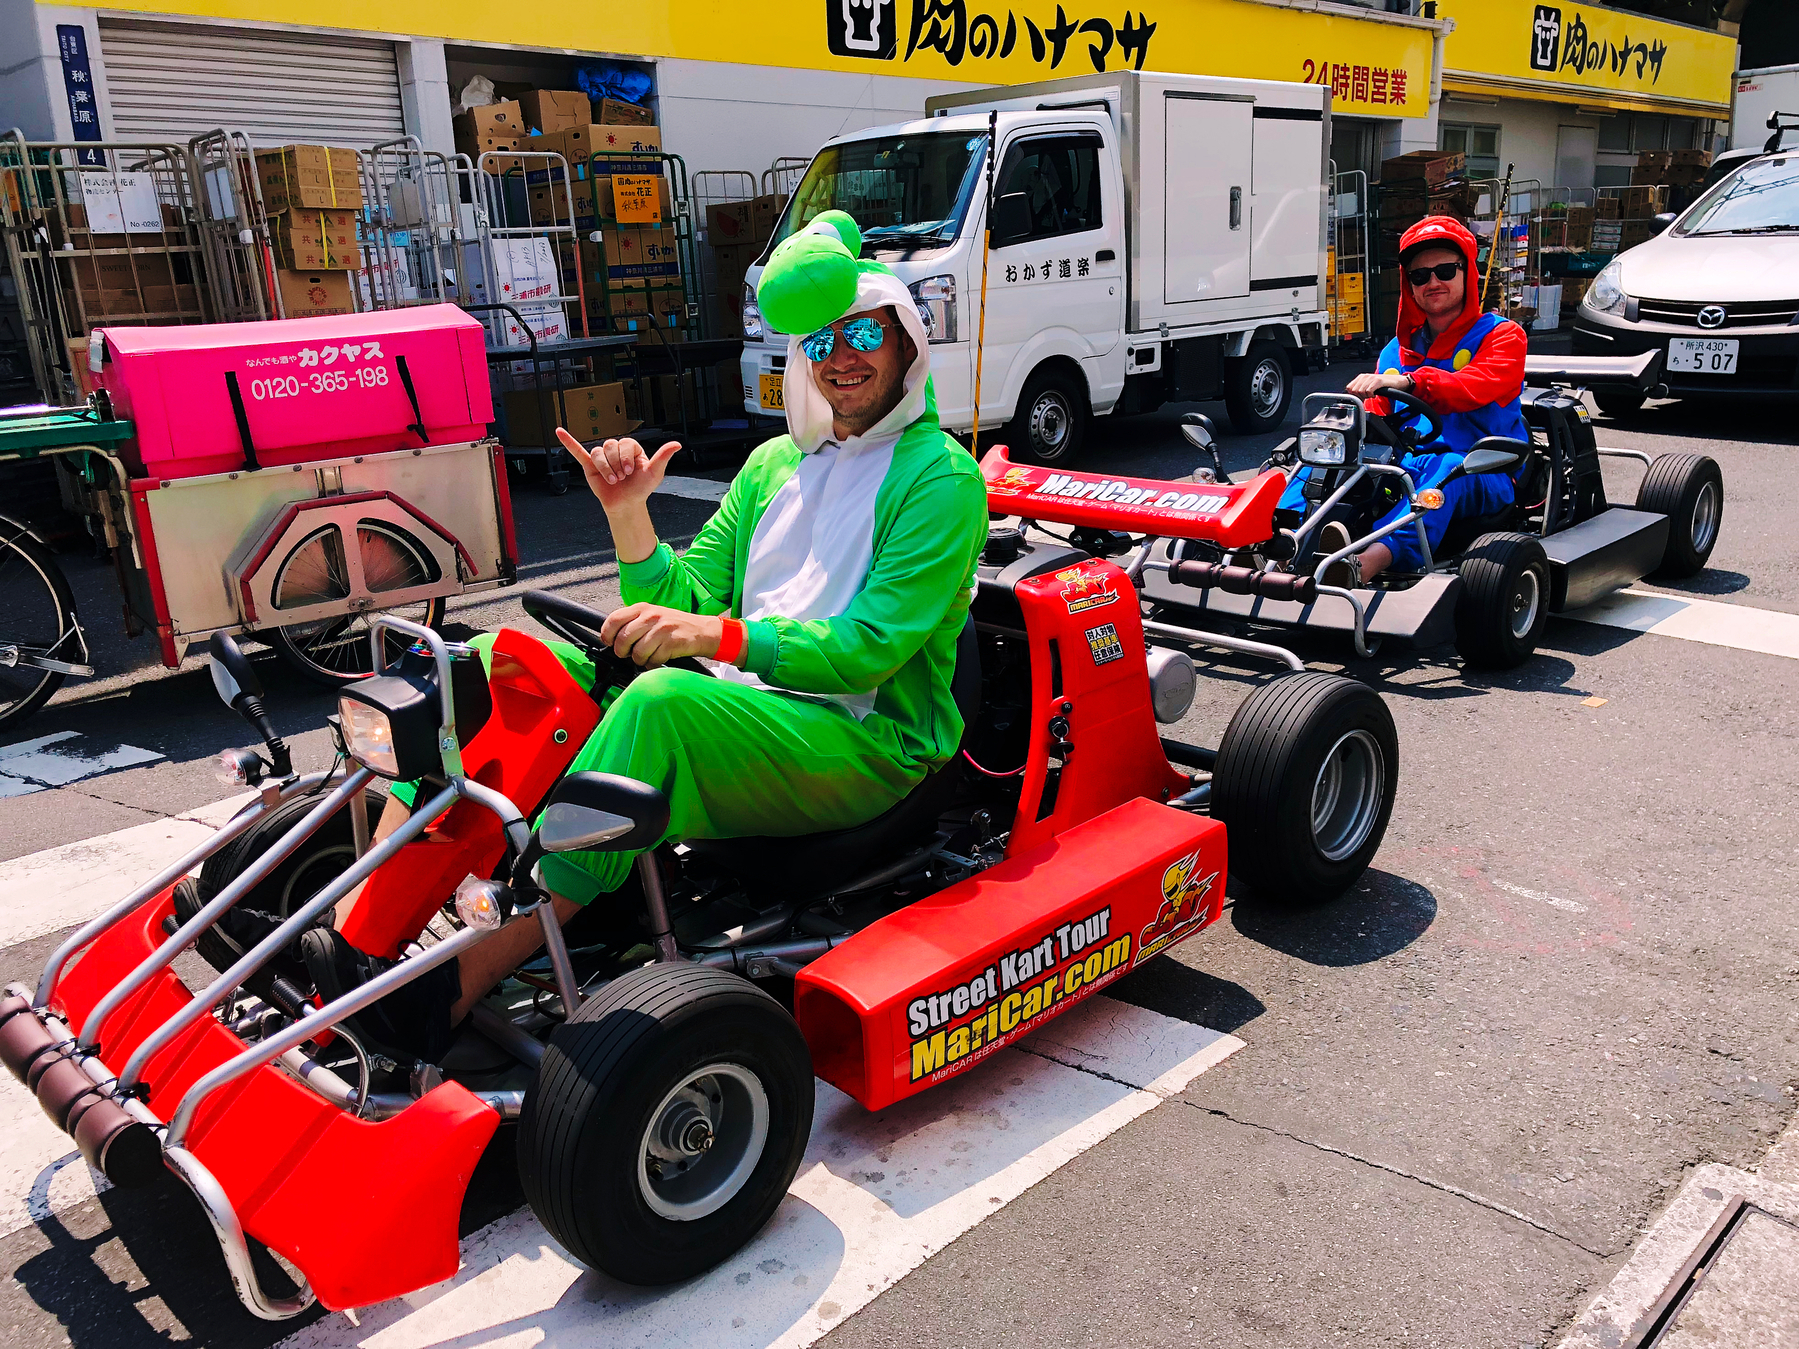 people dressed as Mario characters drive karts